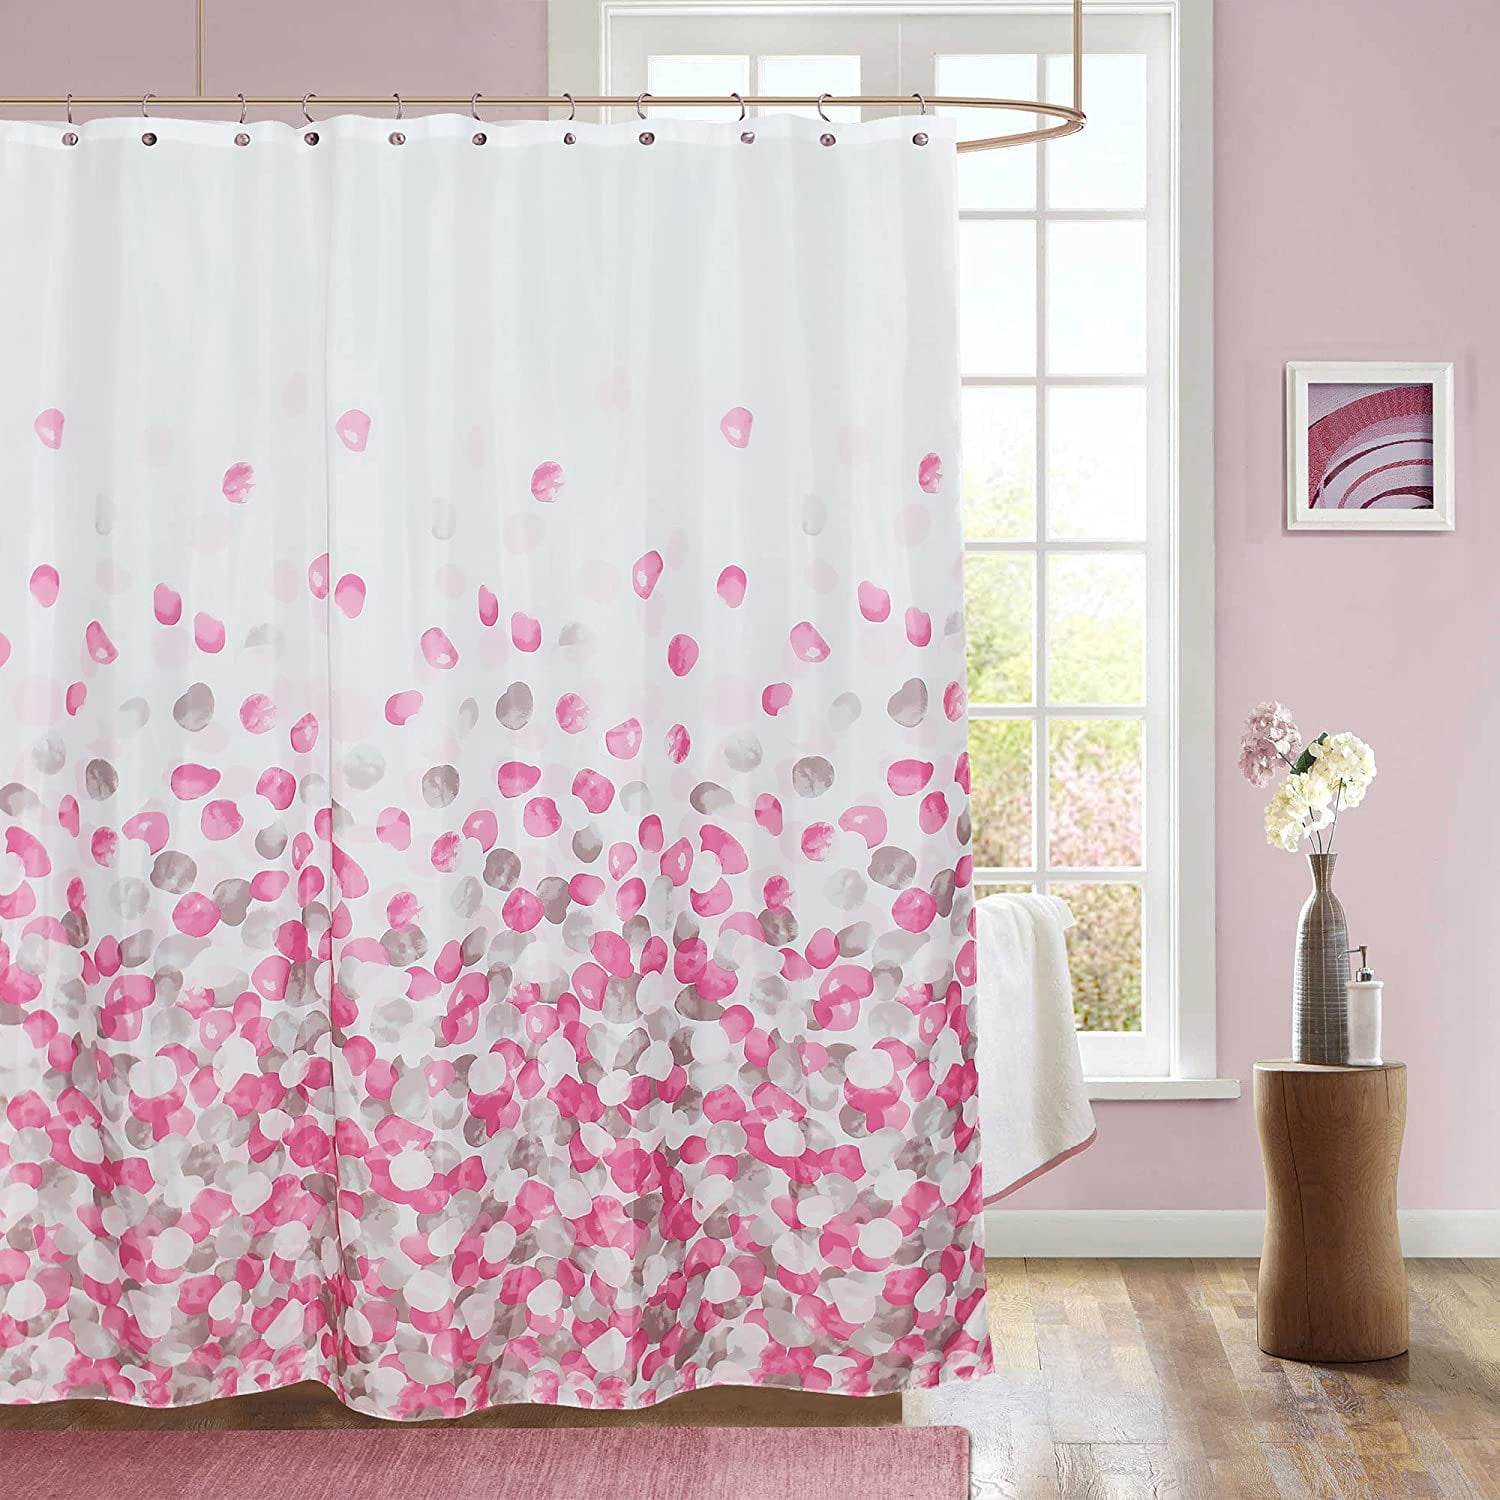 Fox Safflower Butterfly Shower Curtain Home Bathroom Decor Fabric 12hooks 71*71“ 